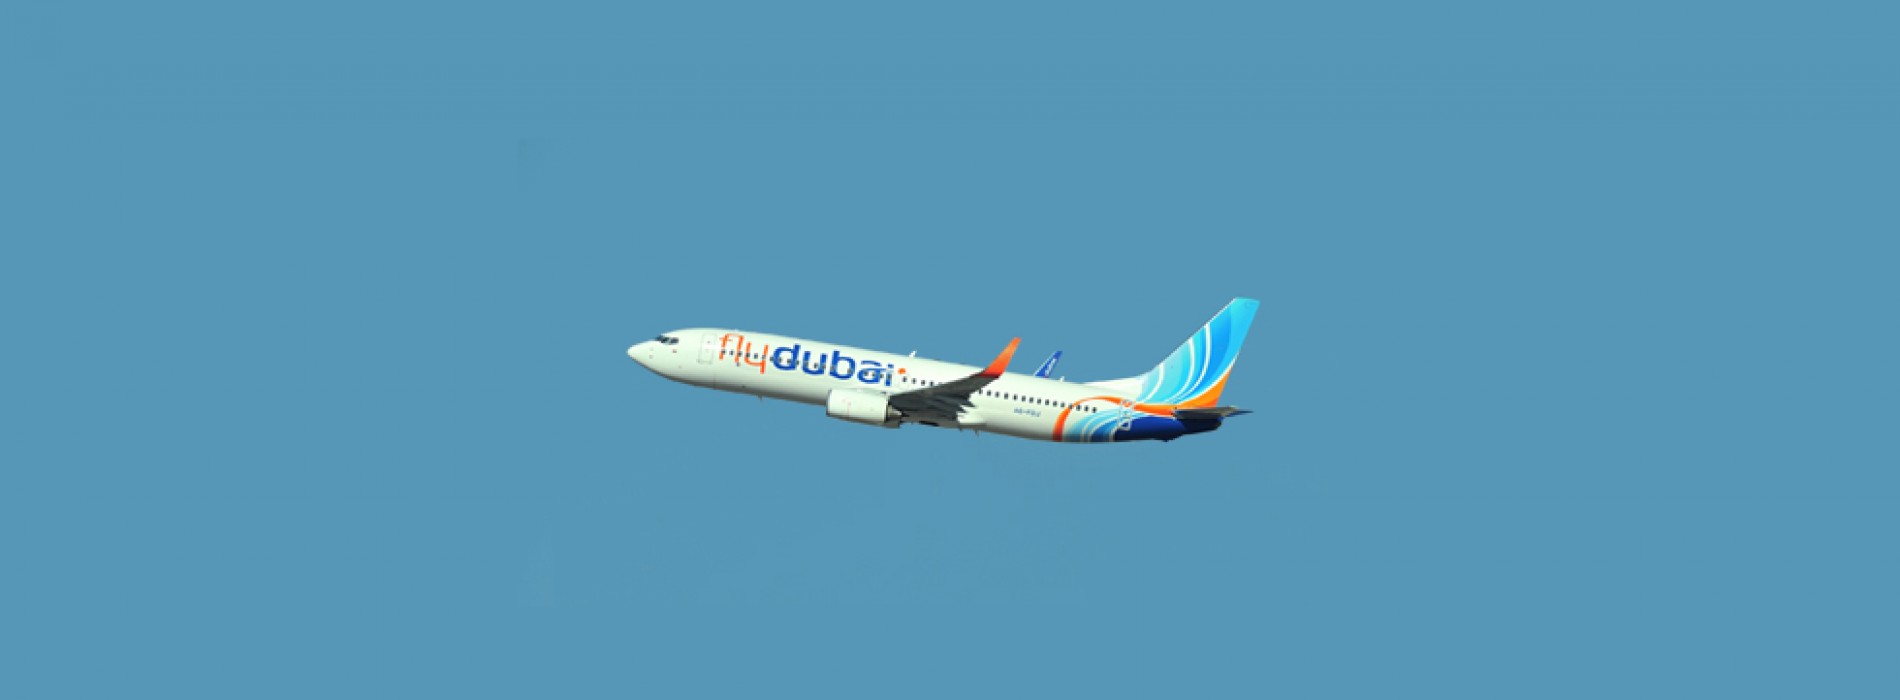 flydubai celebrates its 2nd anniversary in Mumbai